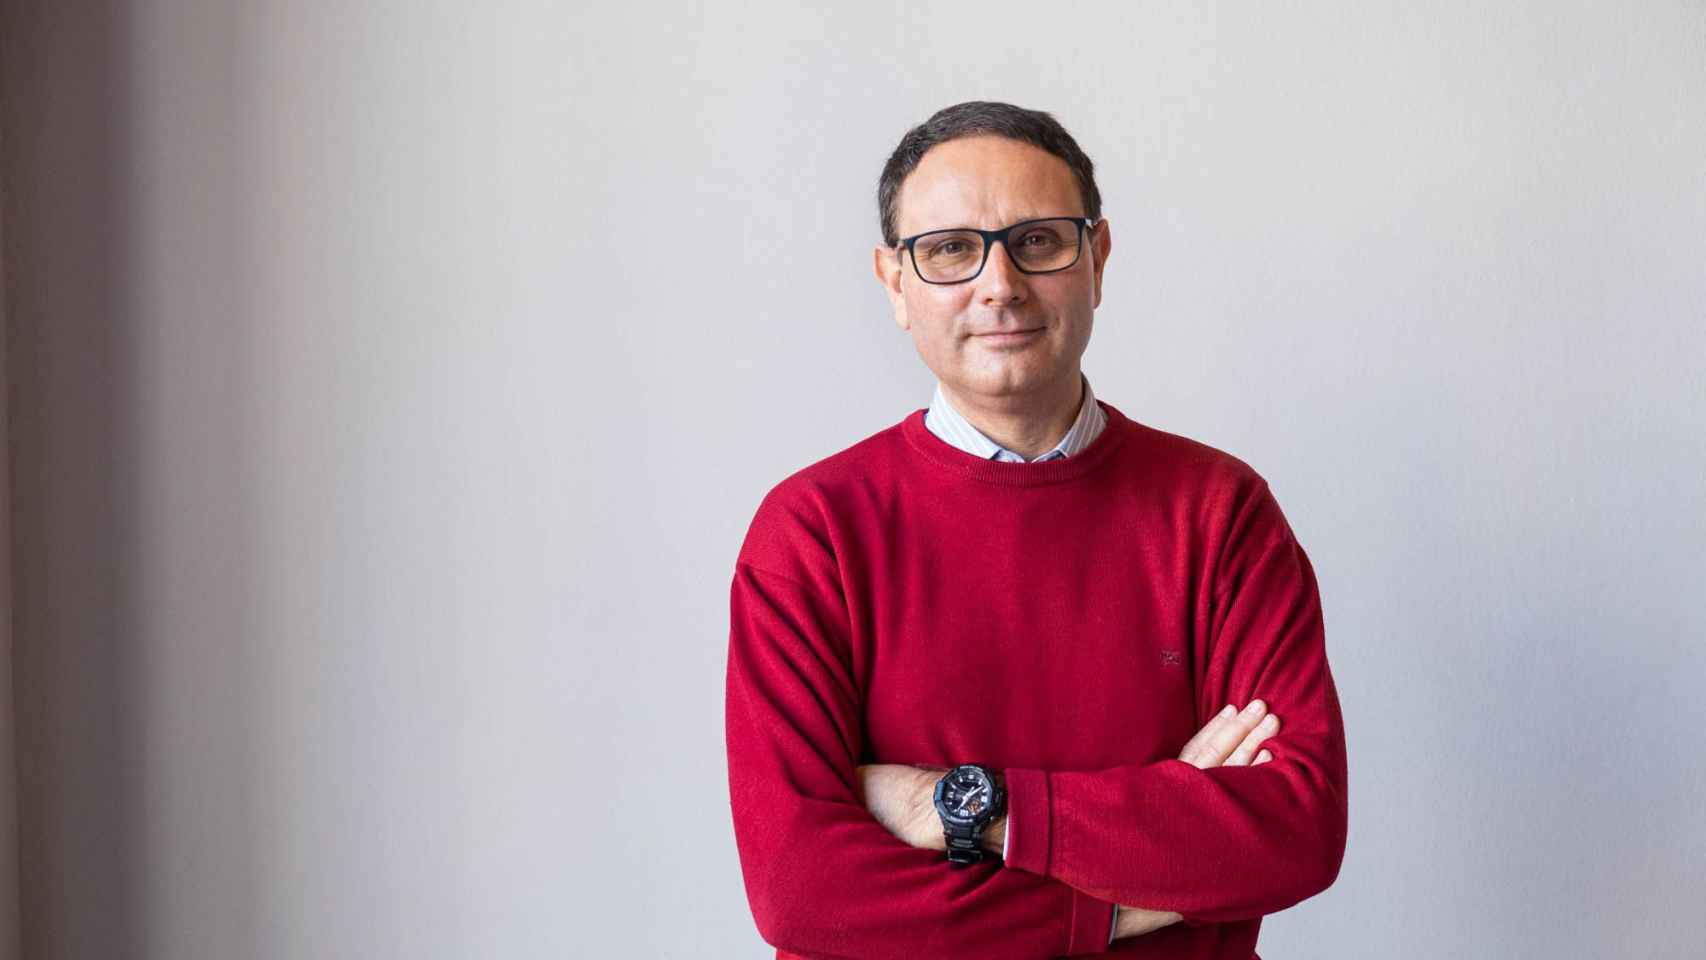 David Vallespín, profesor e investigador de Derecho que aspira al rectorado de la Universitat de Barcelona, posa para Metrópoli Abierta / PABLO MIRANZO